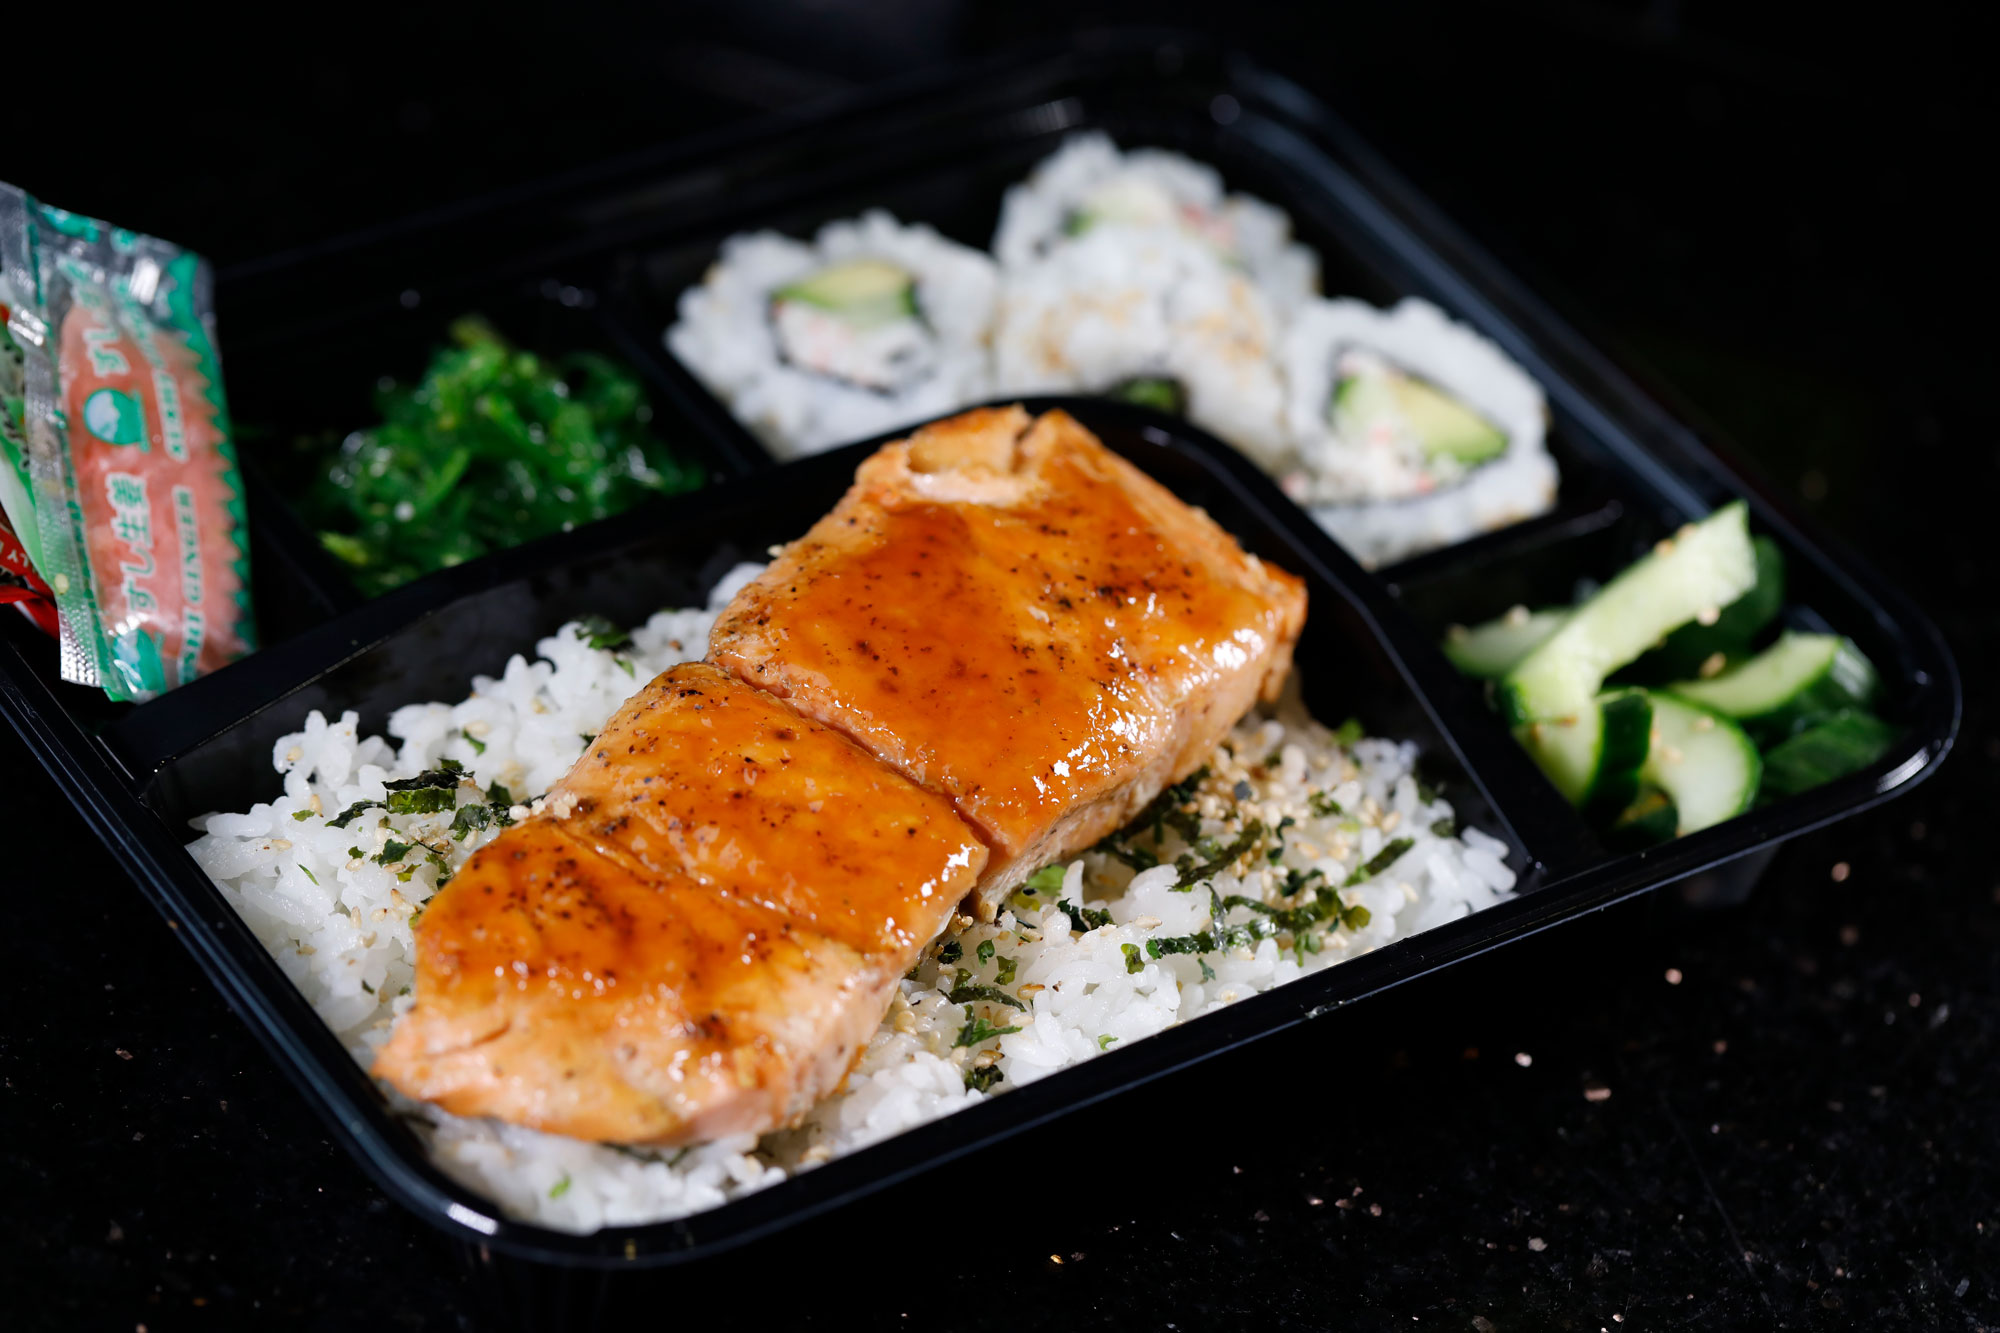 SEA Hachi-ko Plated Food (salmon, rice and california rolls)